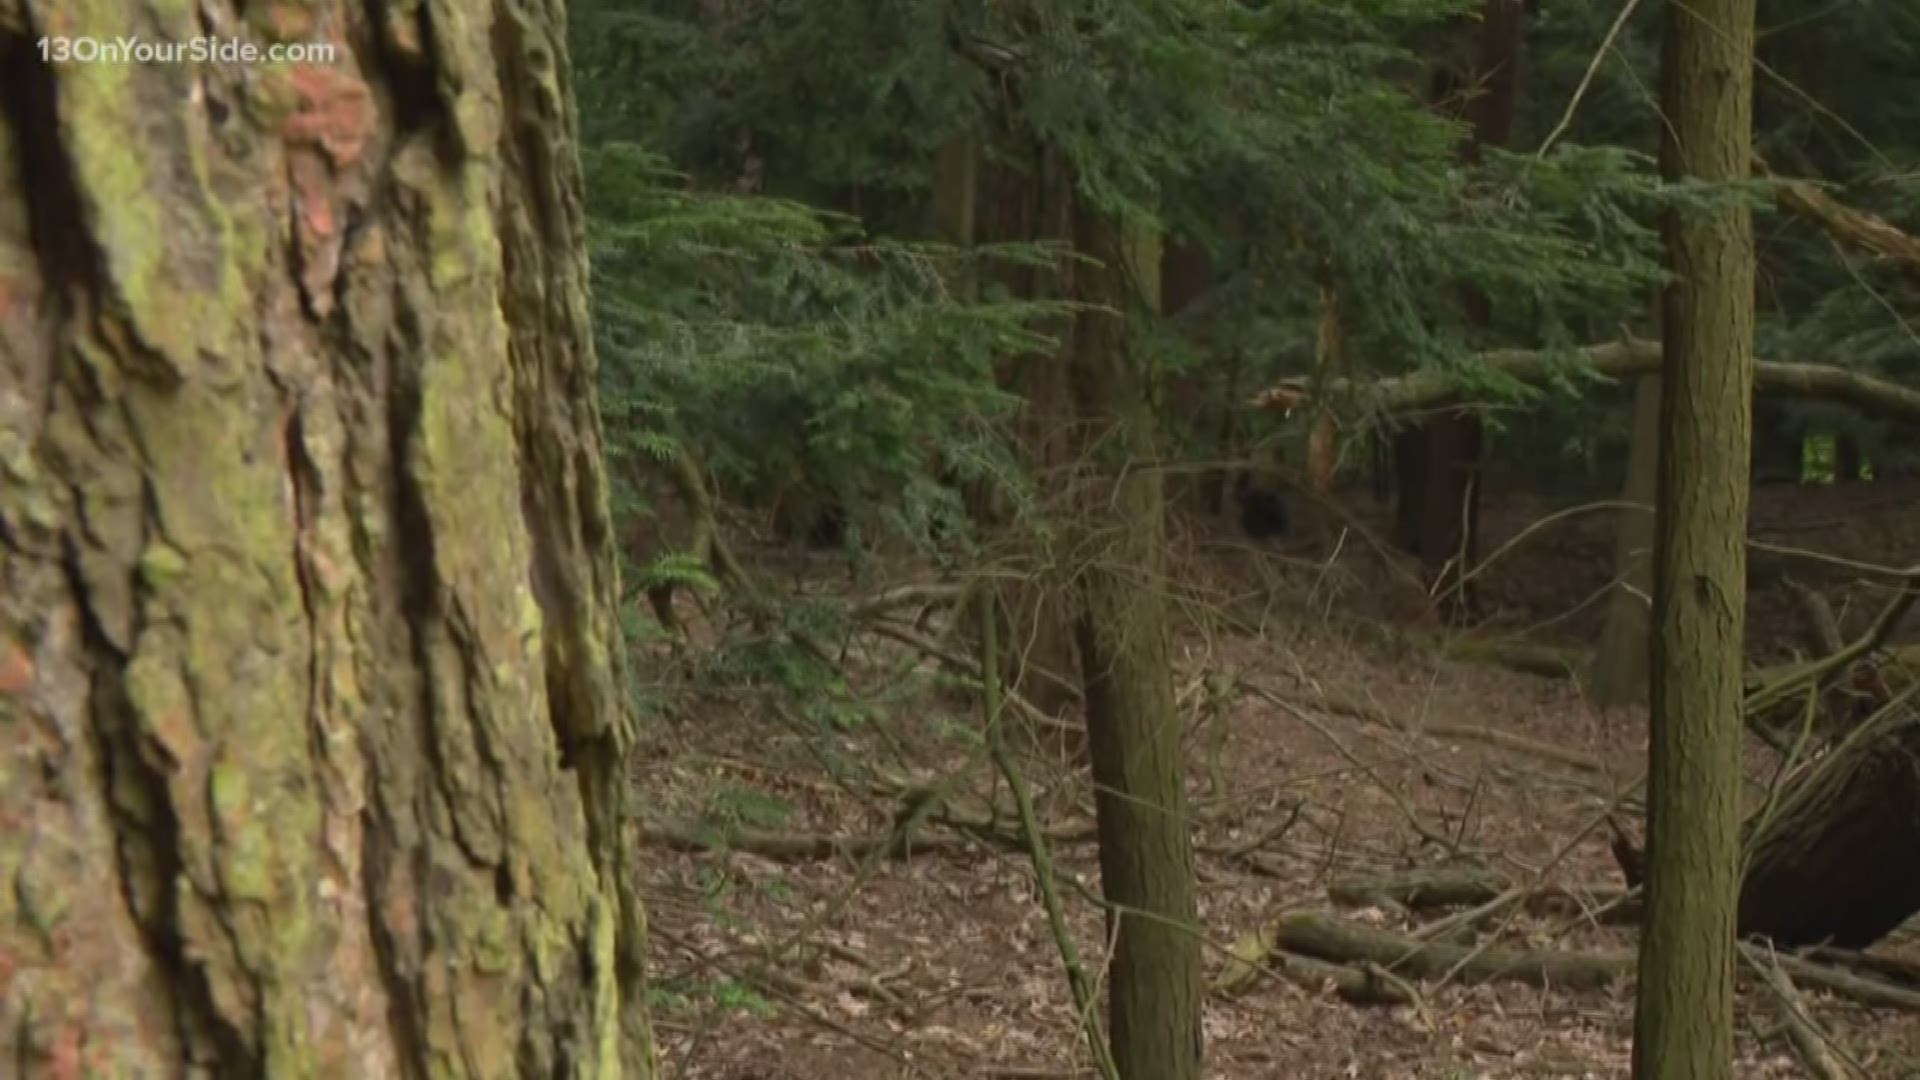 More than $50K pledged to save Hemlock Trees